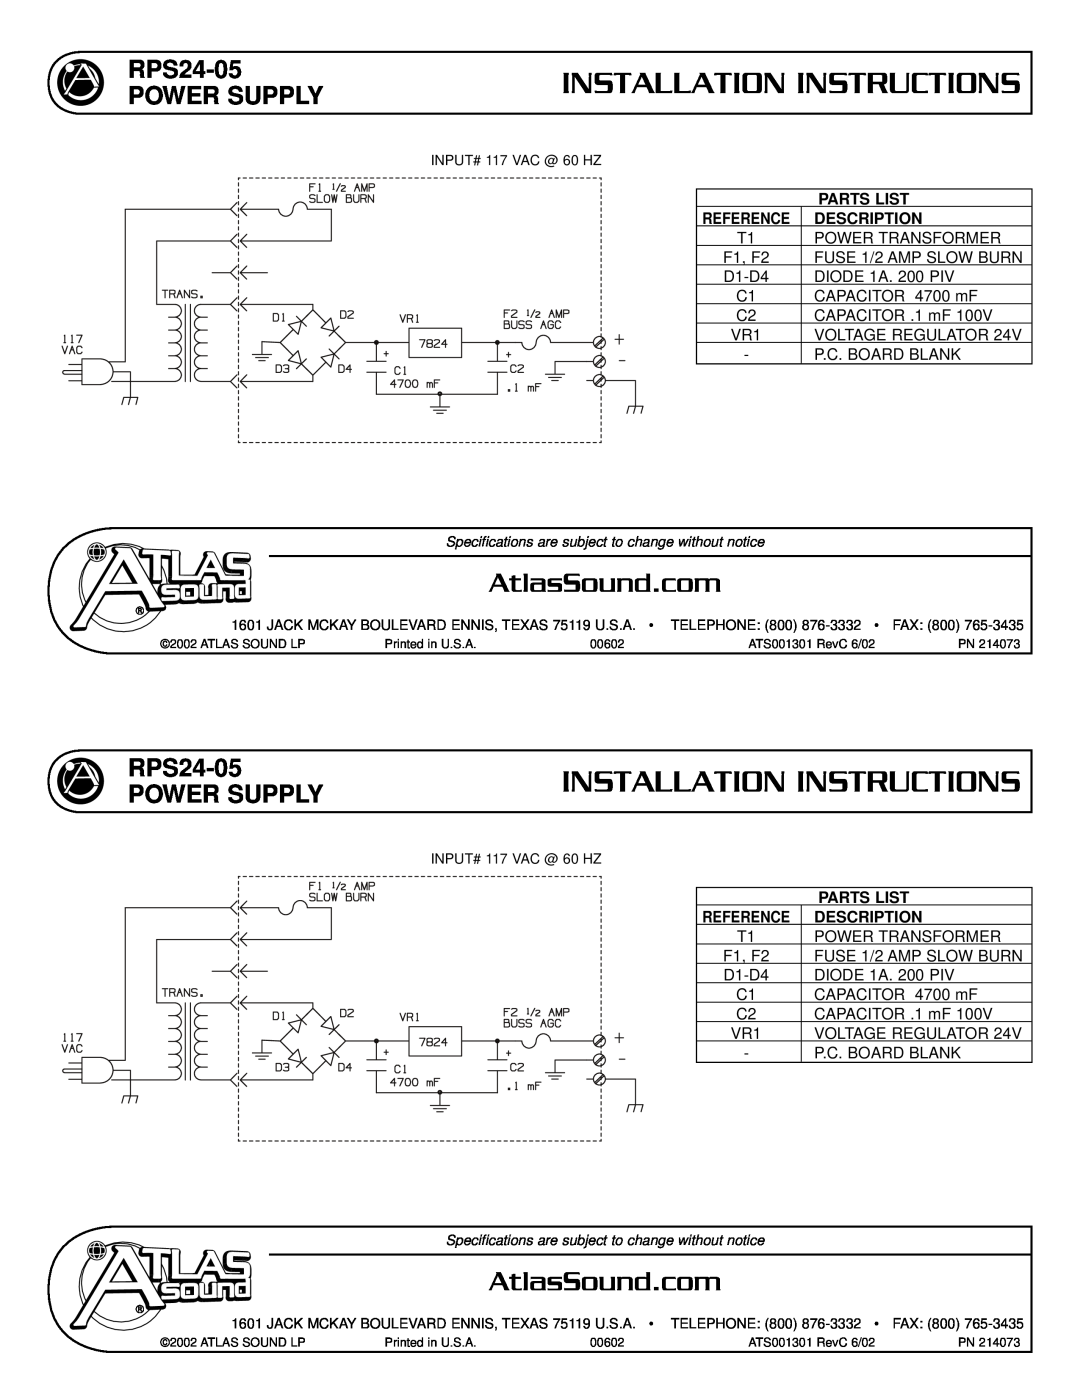 Atlas Sound installation instructions Installation Instructions, AtlasSound.com, RPS24-05 POWER SUPPLY, Parts List 